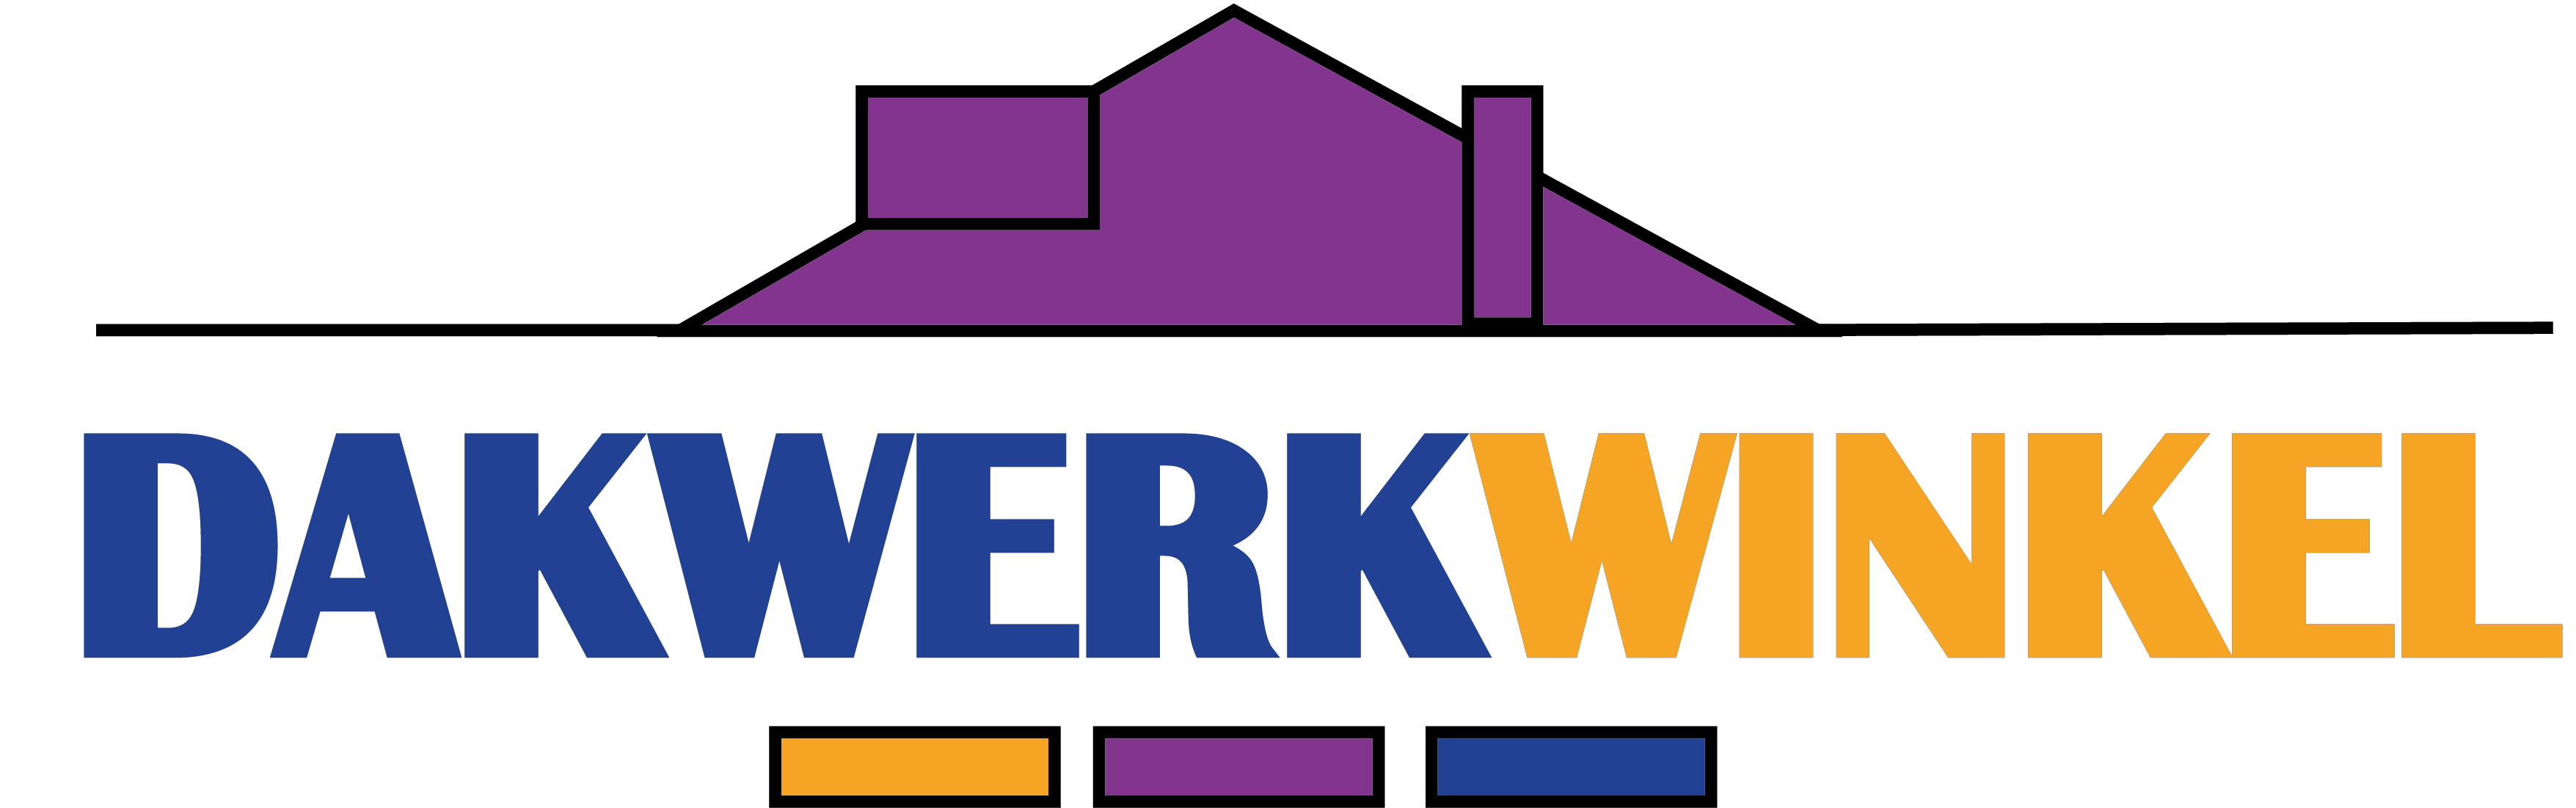 Dakwerkwinkel-logo